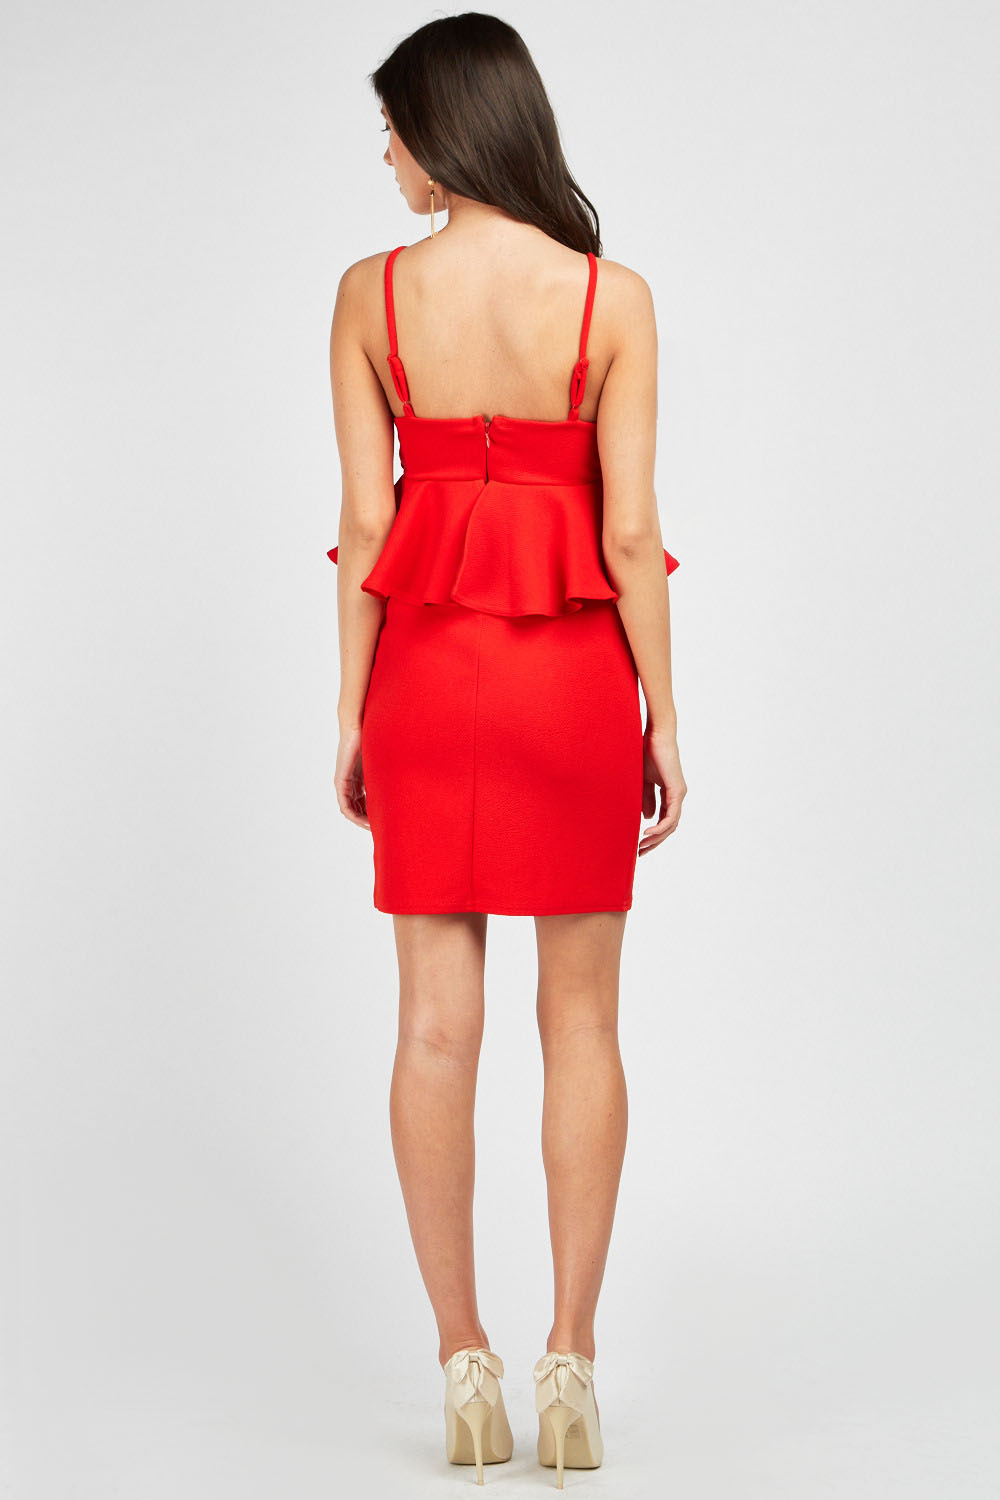 Red Sweetheart Peplum Dress - Just $7